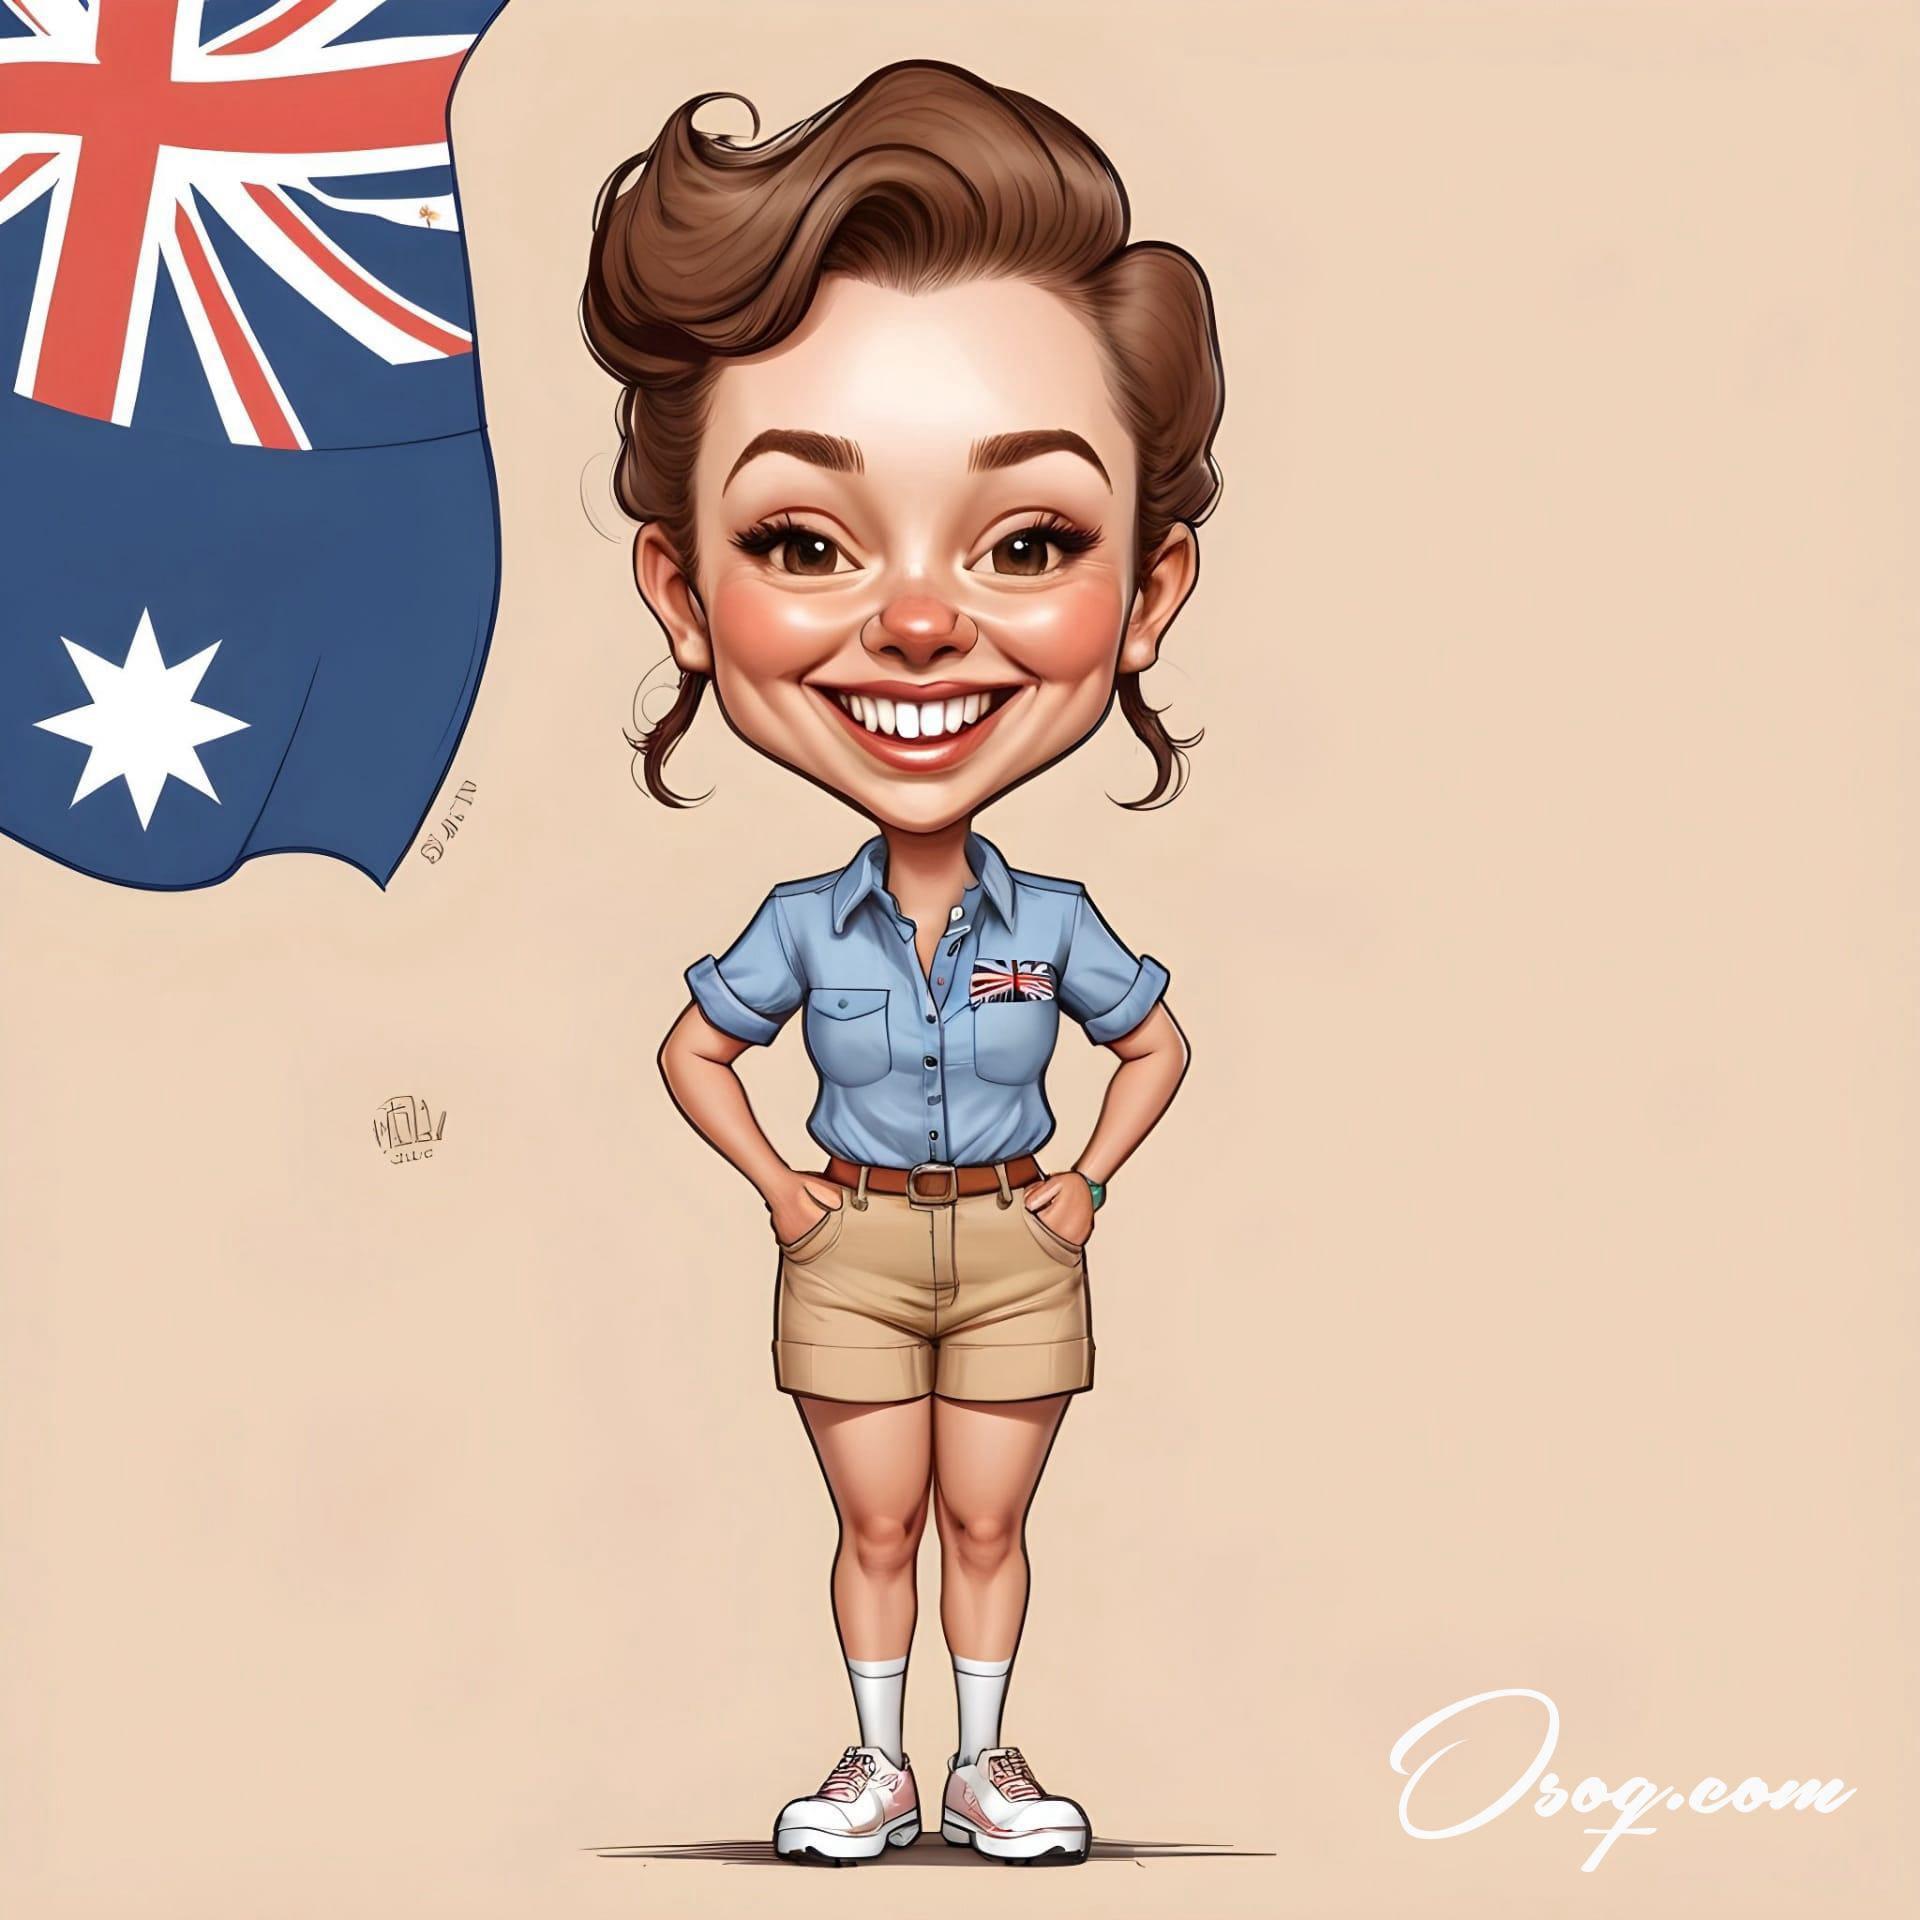 Cartoons about australia 01